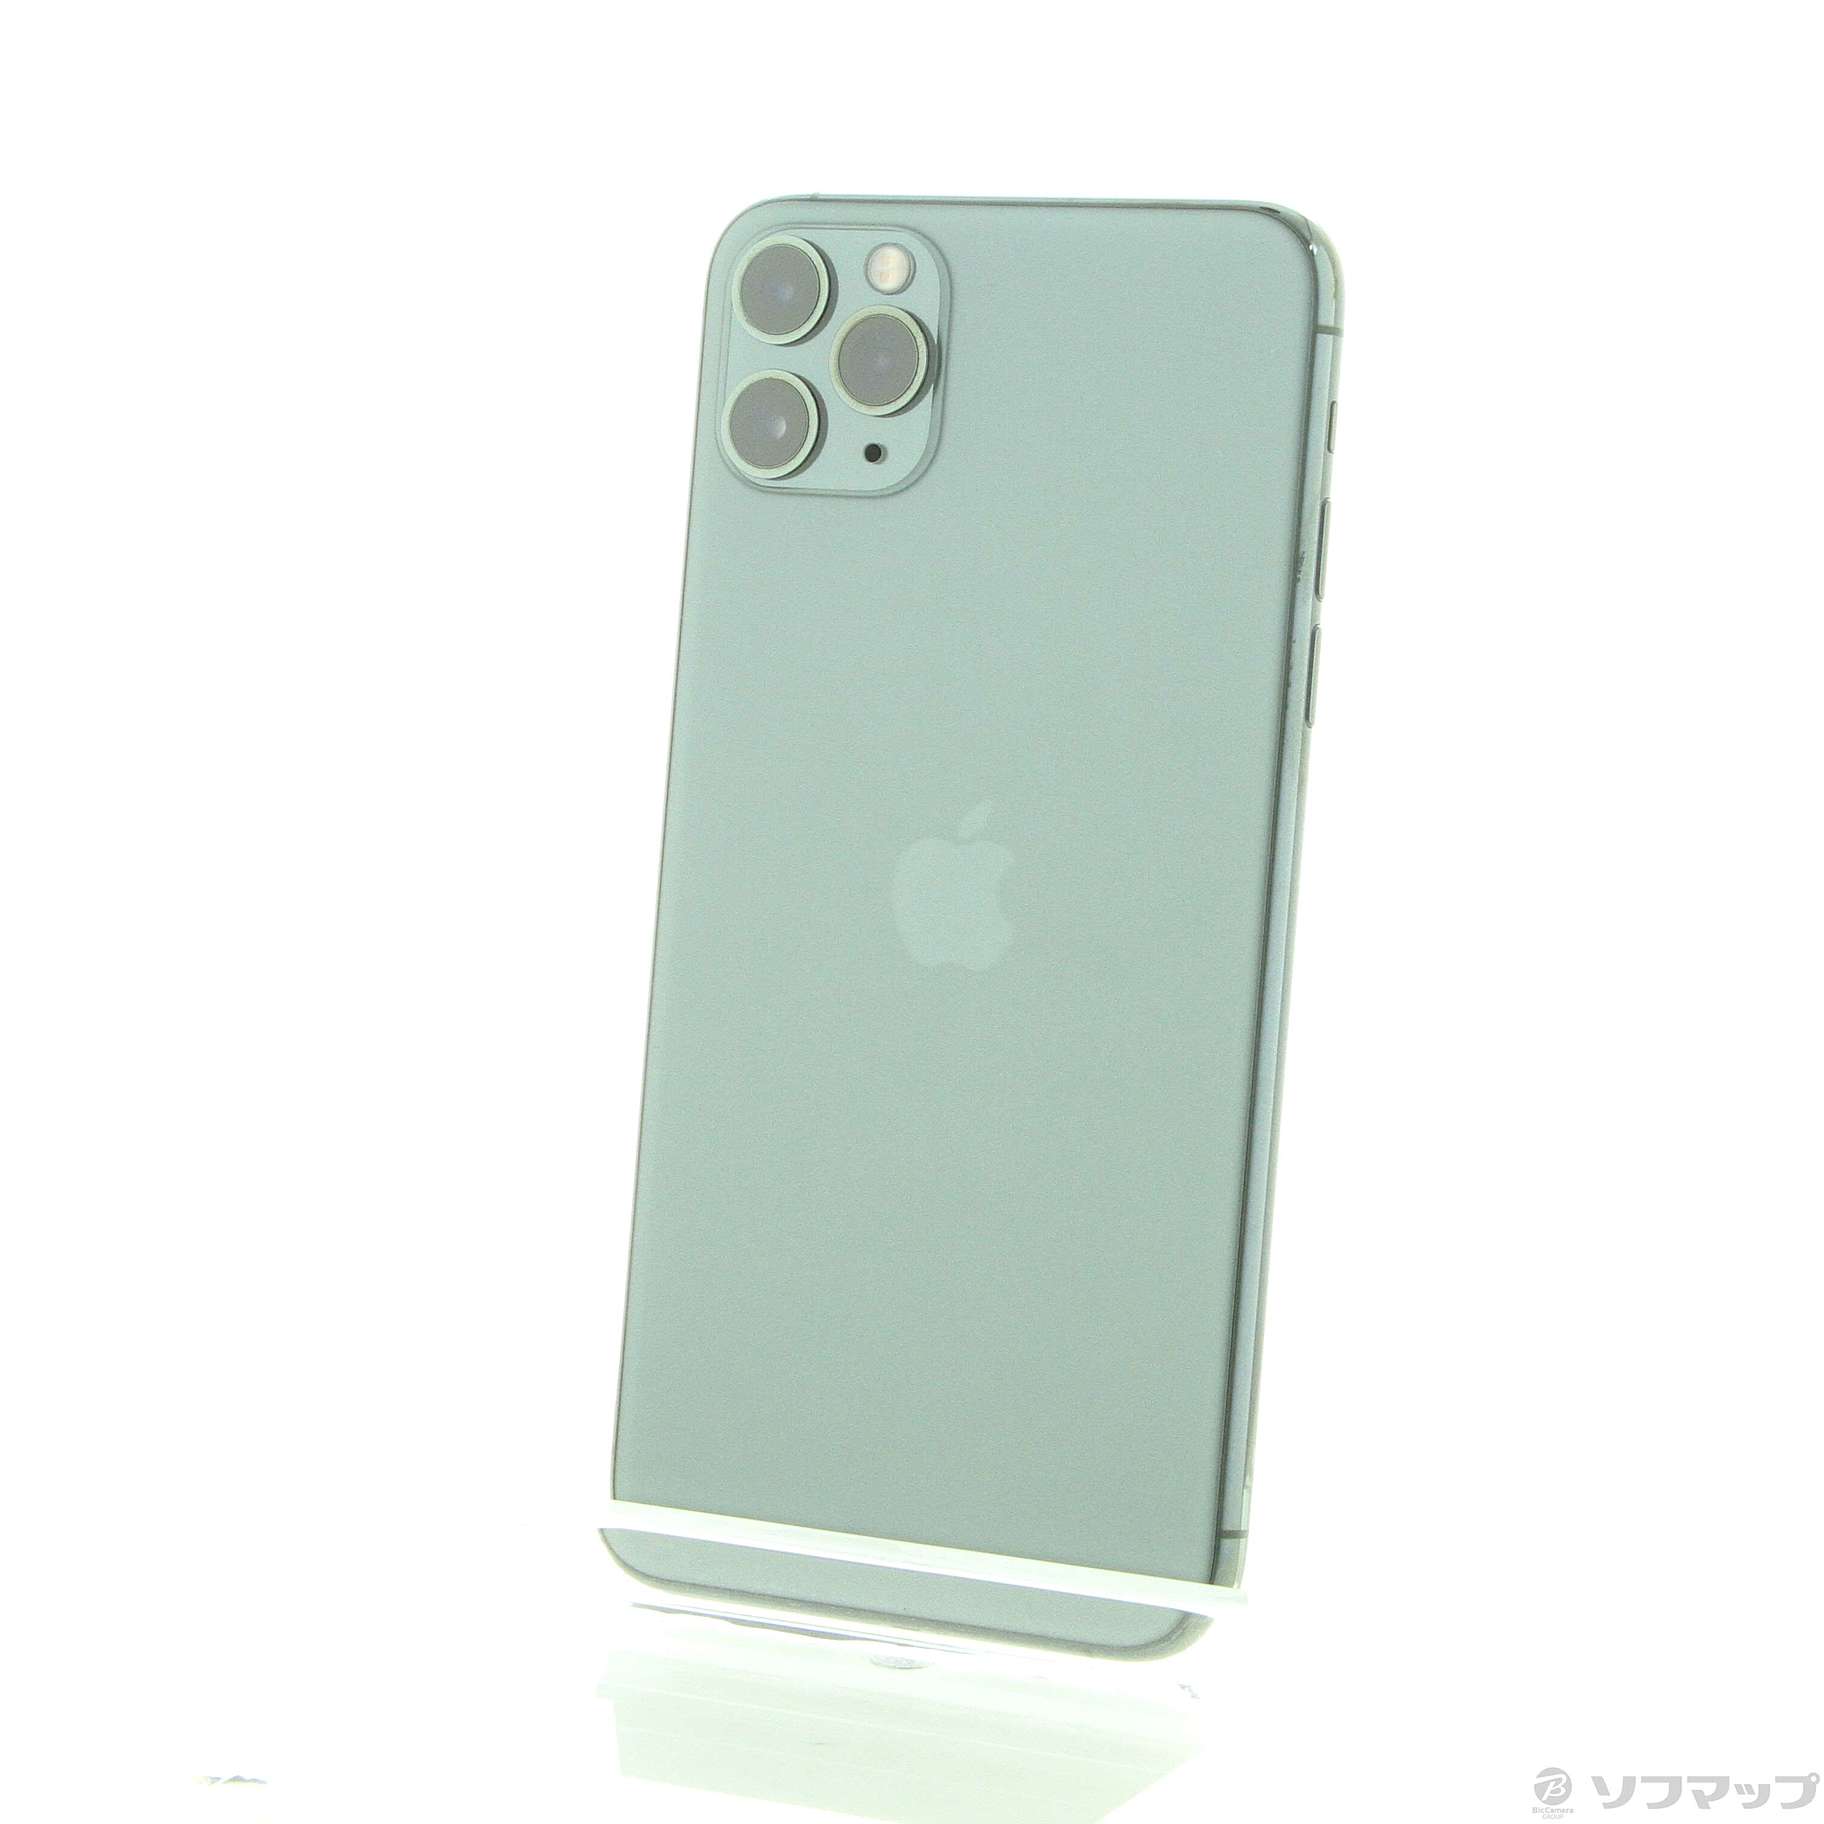 iPhone11 ProMax 256G Green